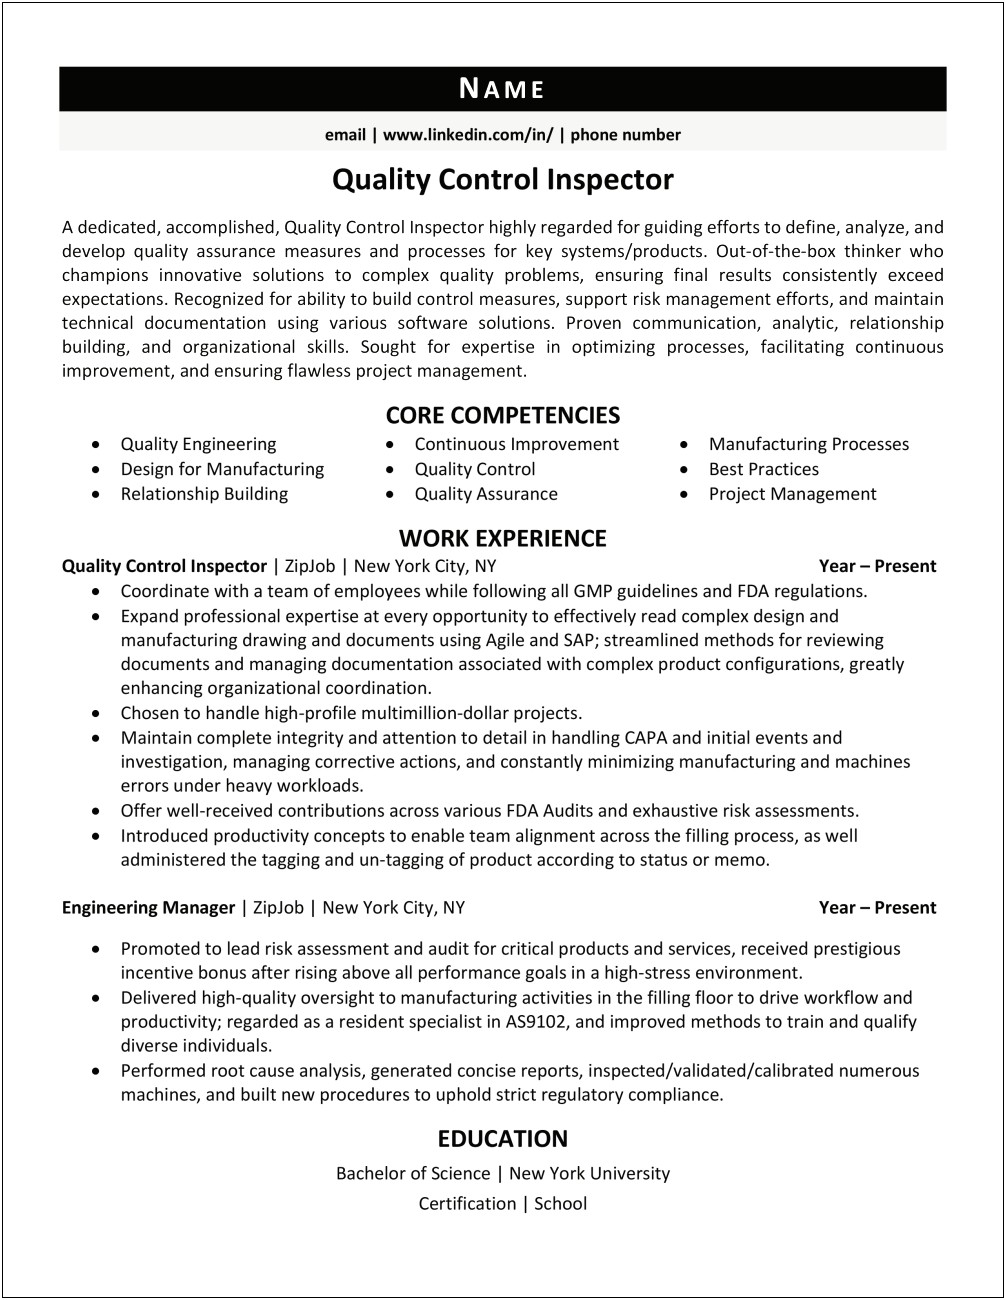 Resume Accomplishments Examples Quality Control